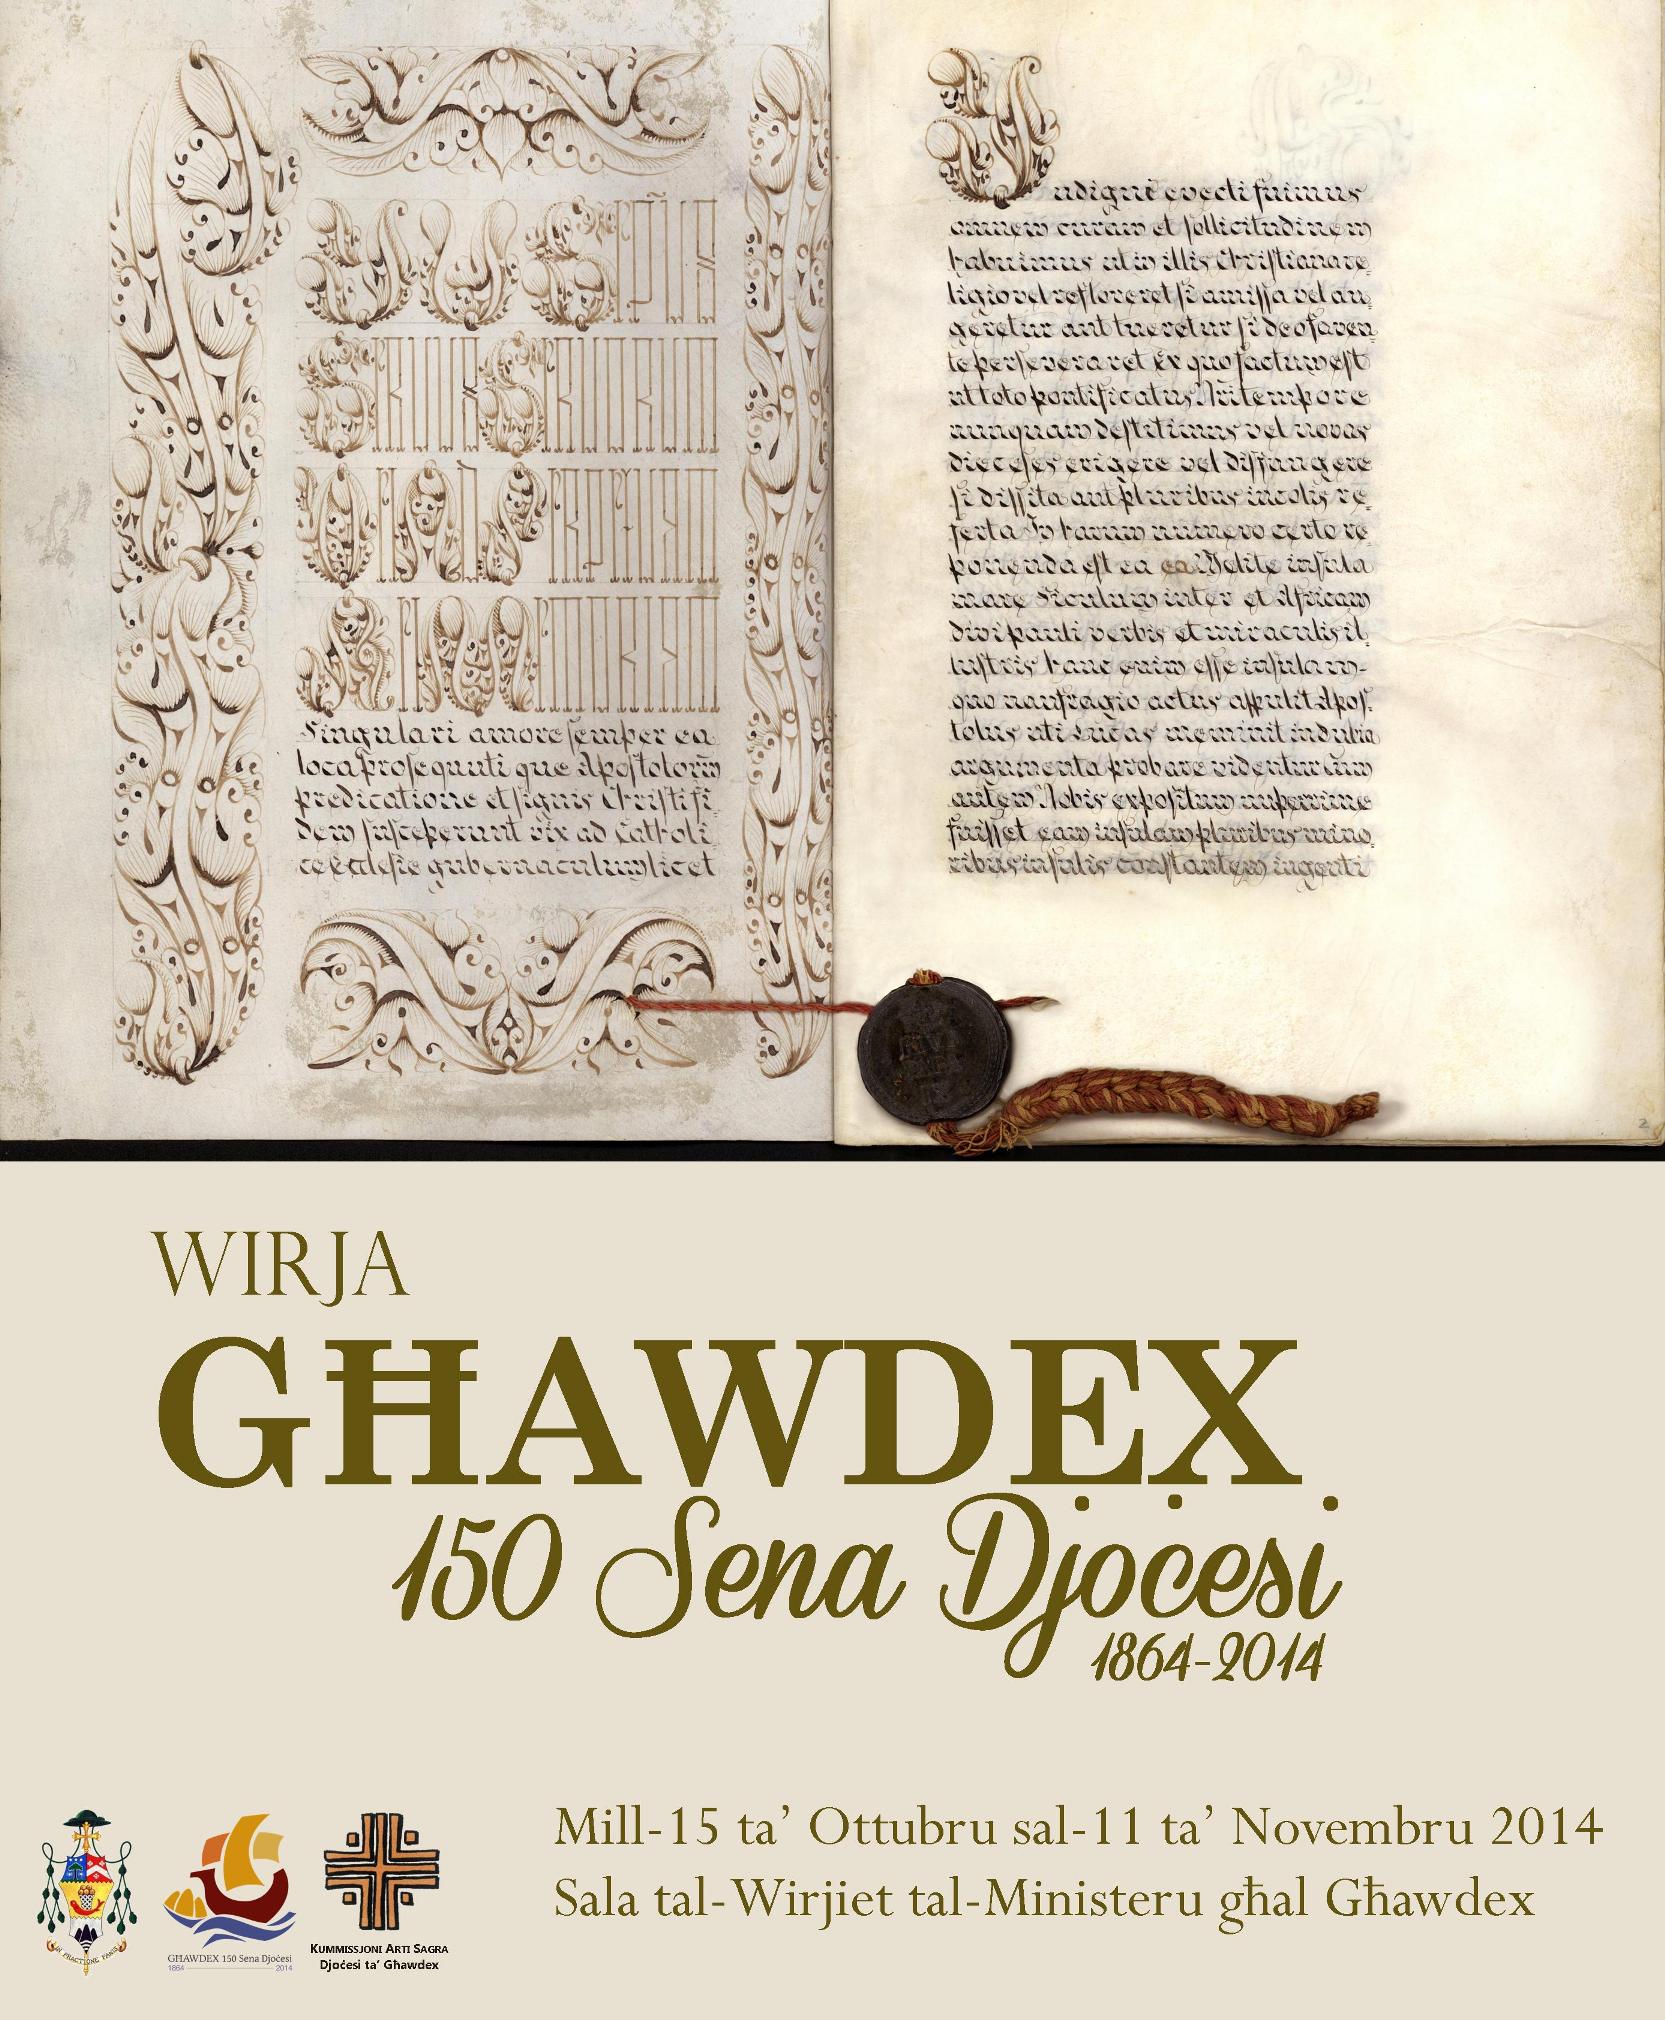 wirja-ghawdex-150-sena-djocesi.jpg